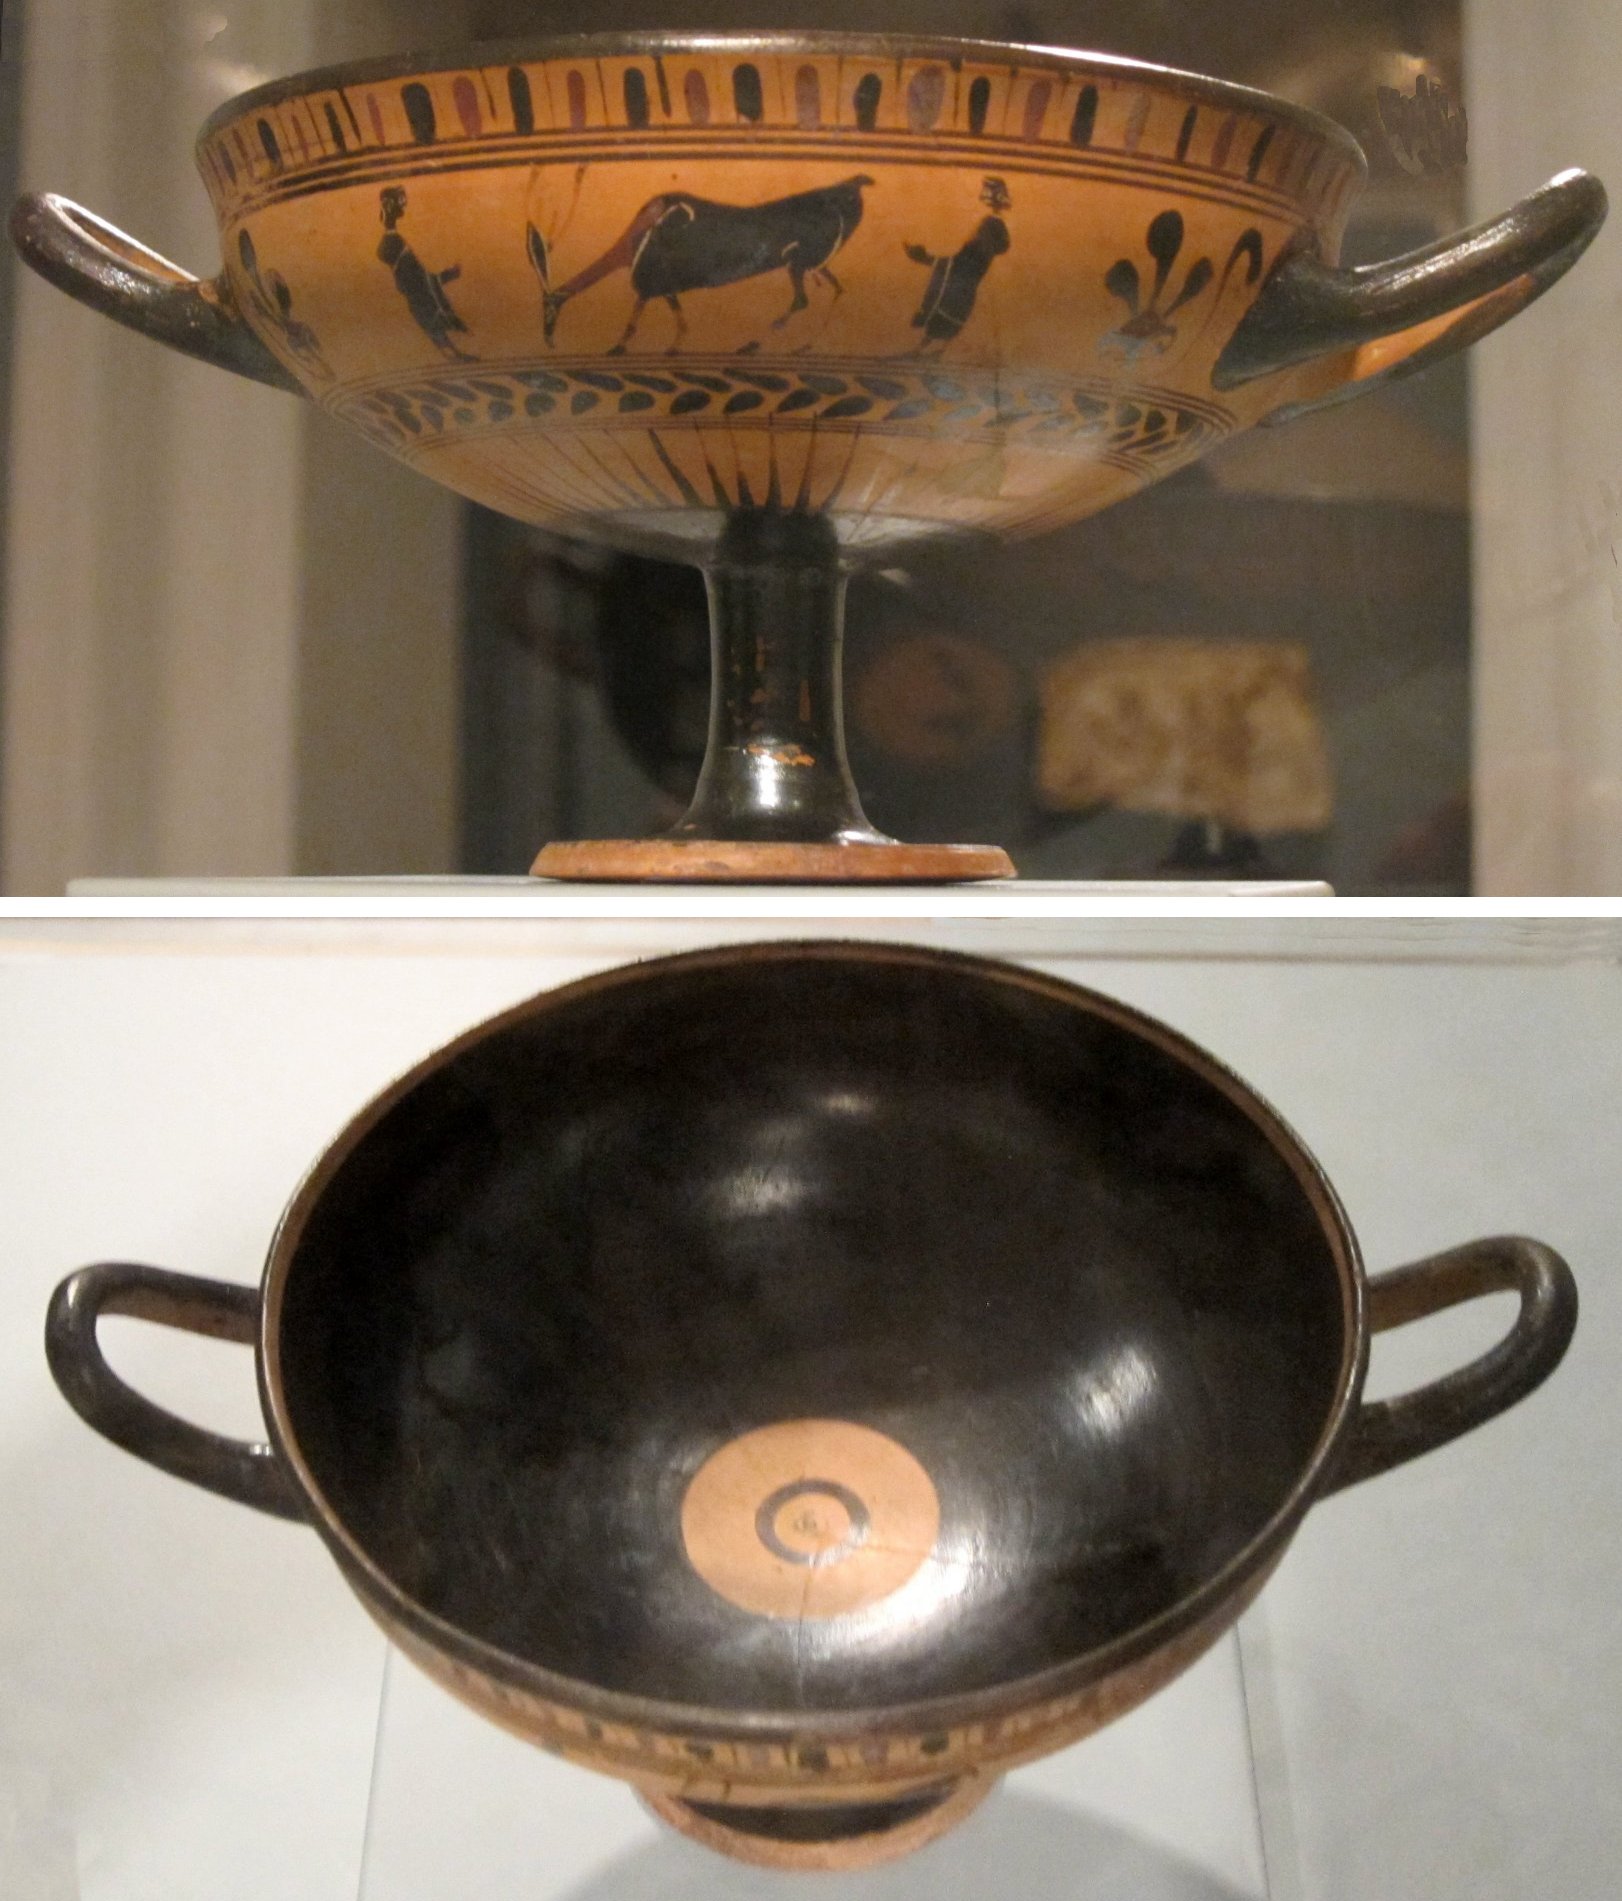 https://upload.wikimedia.org/wikipedia/commons/6/6d/Black-figure_terracotta_kylix_%28wine_cup%29%2C_Greece._late_6th_century_BCE%2C_Honolulu_Academy_of_Arts.jpg